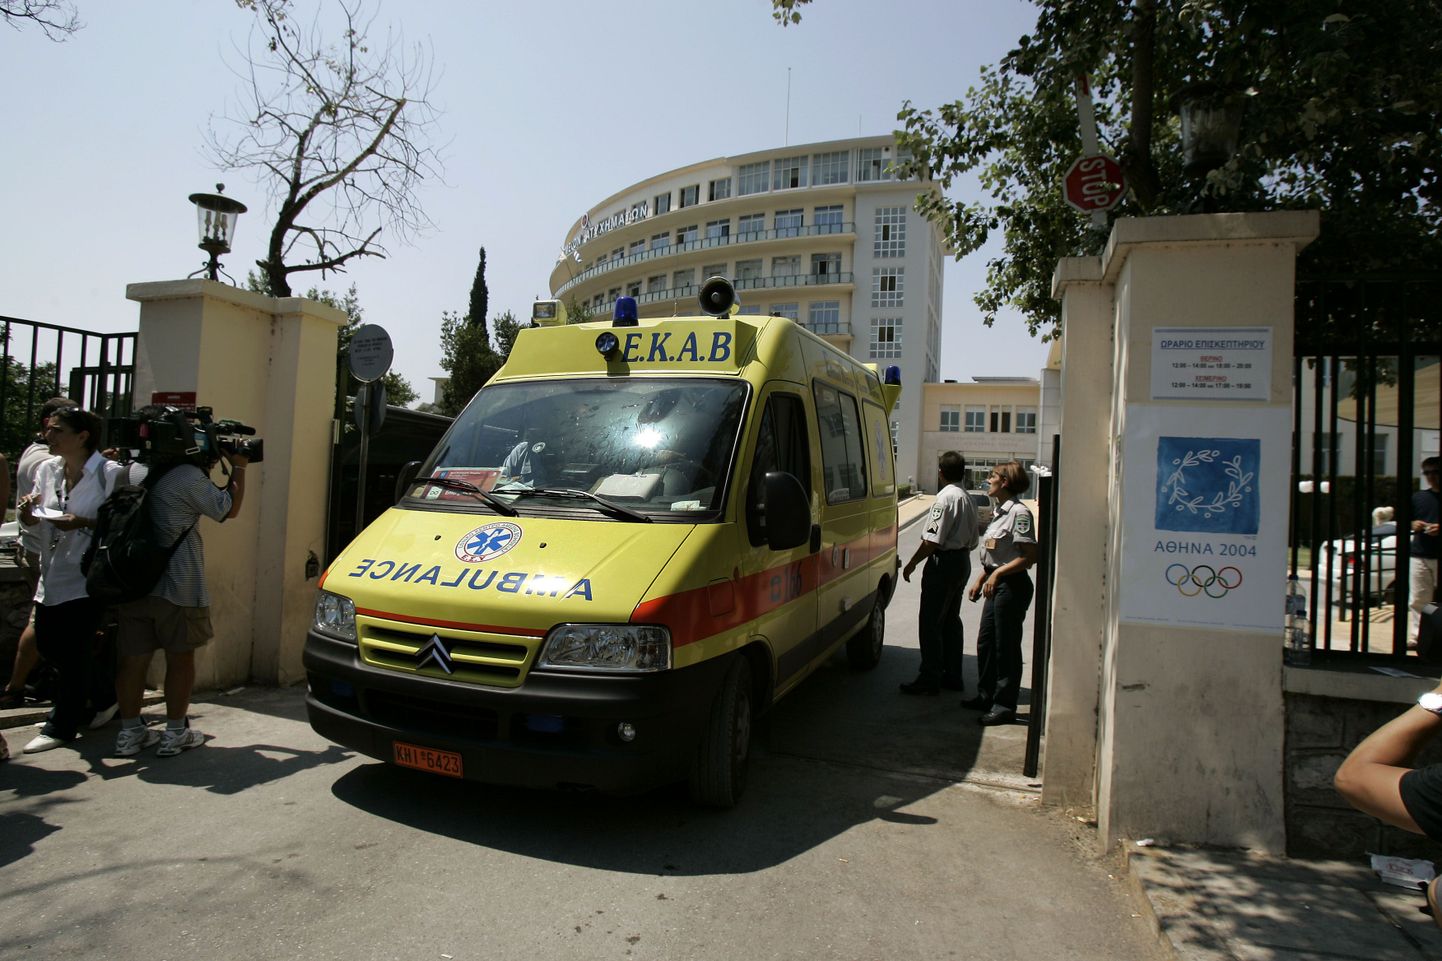 Kreeka kiirabi